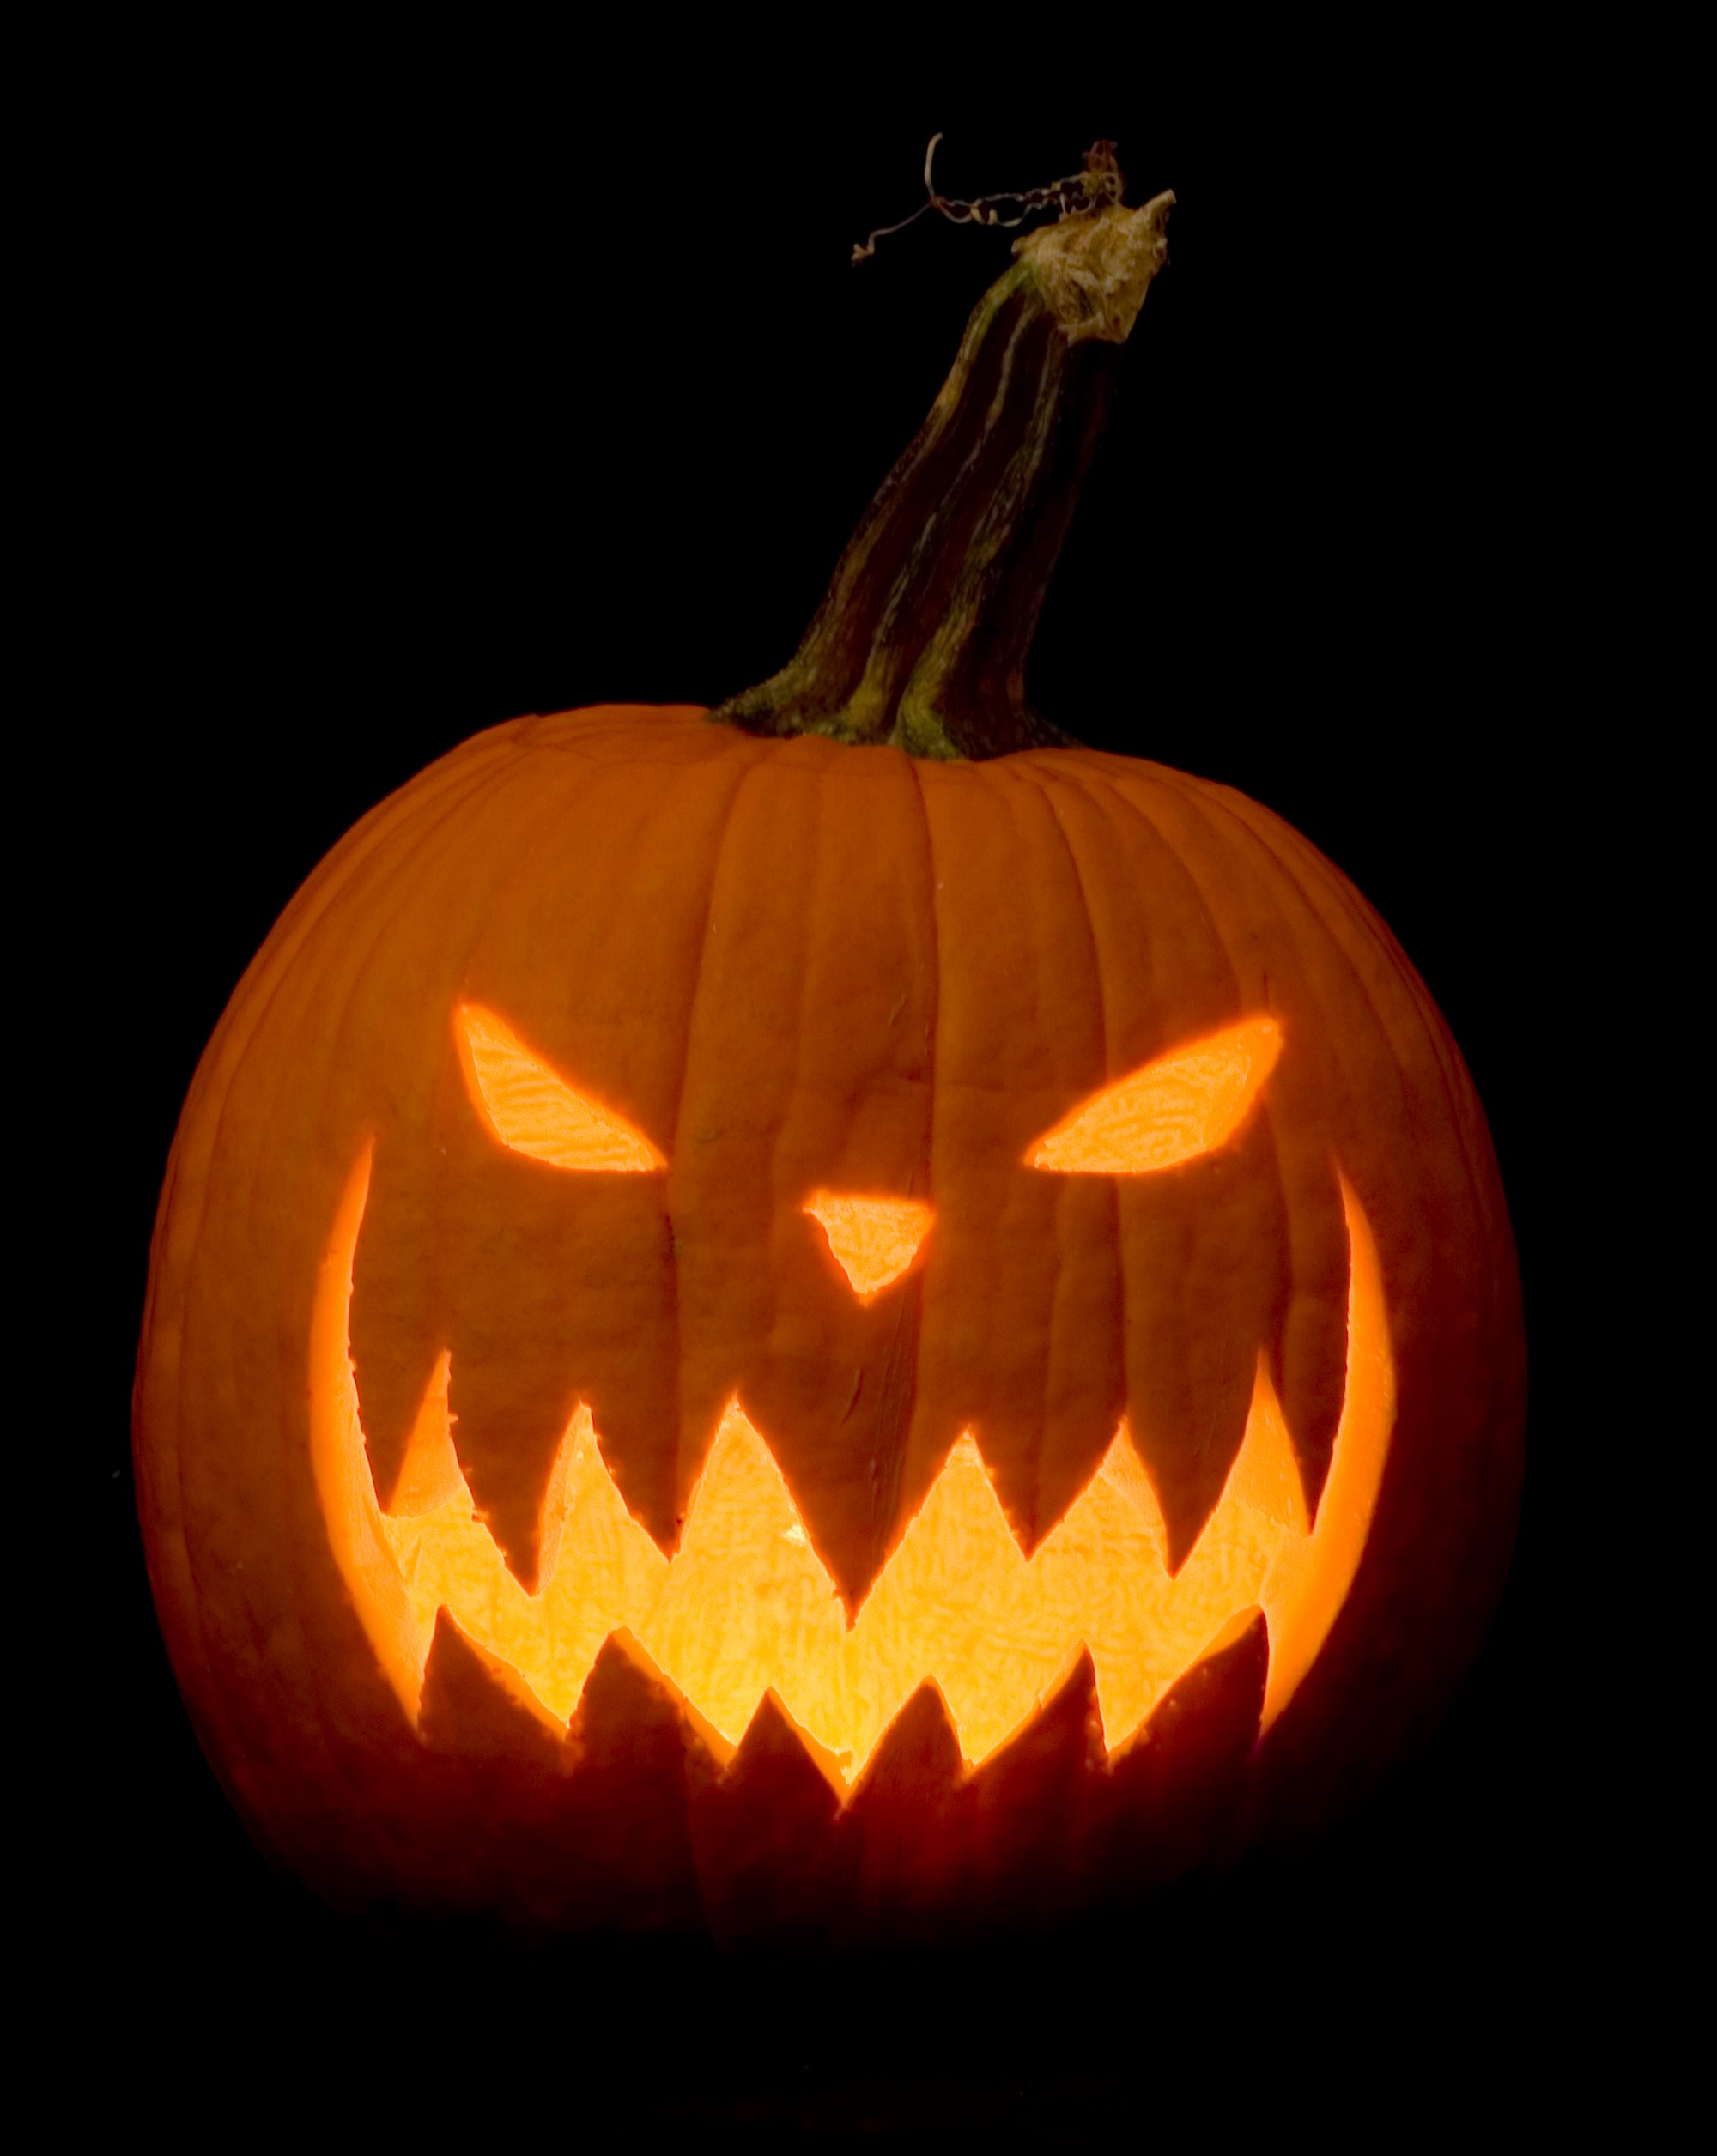 A Scary Pumpkin